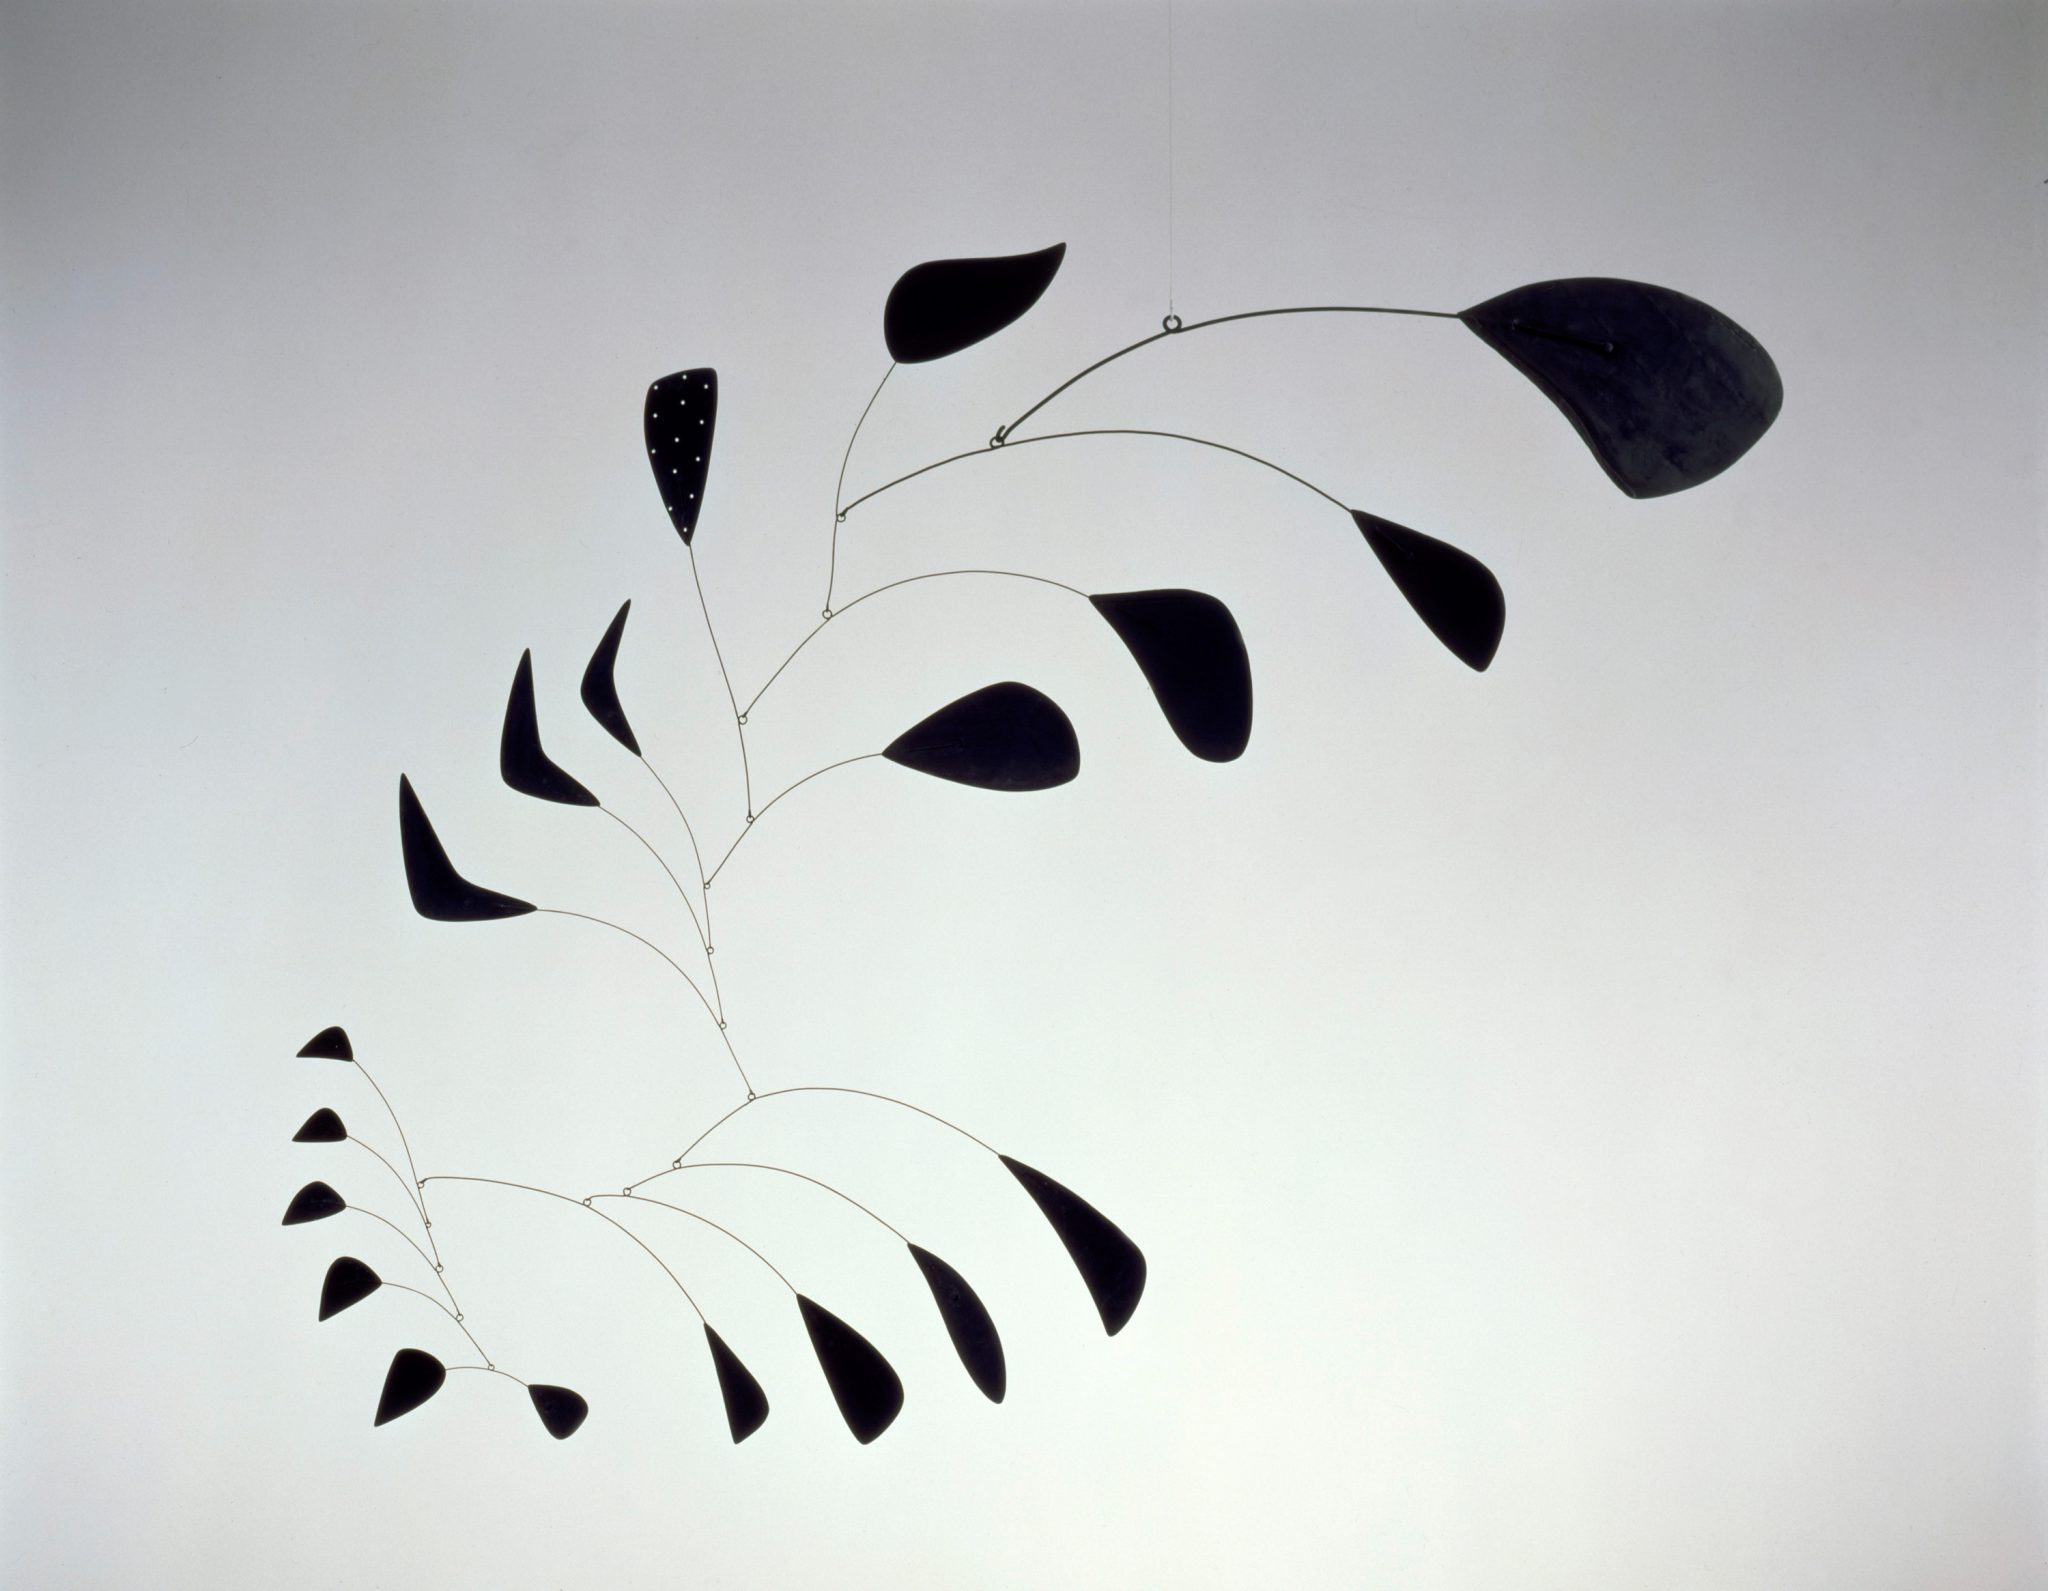 Alexander Calder/Raoul Marks, "Vertical Foliage"